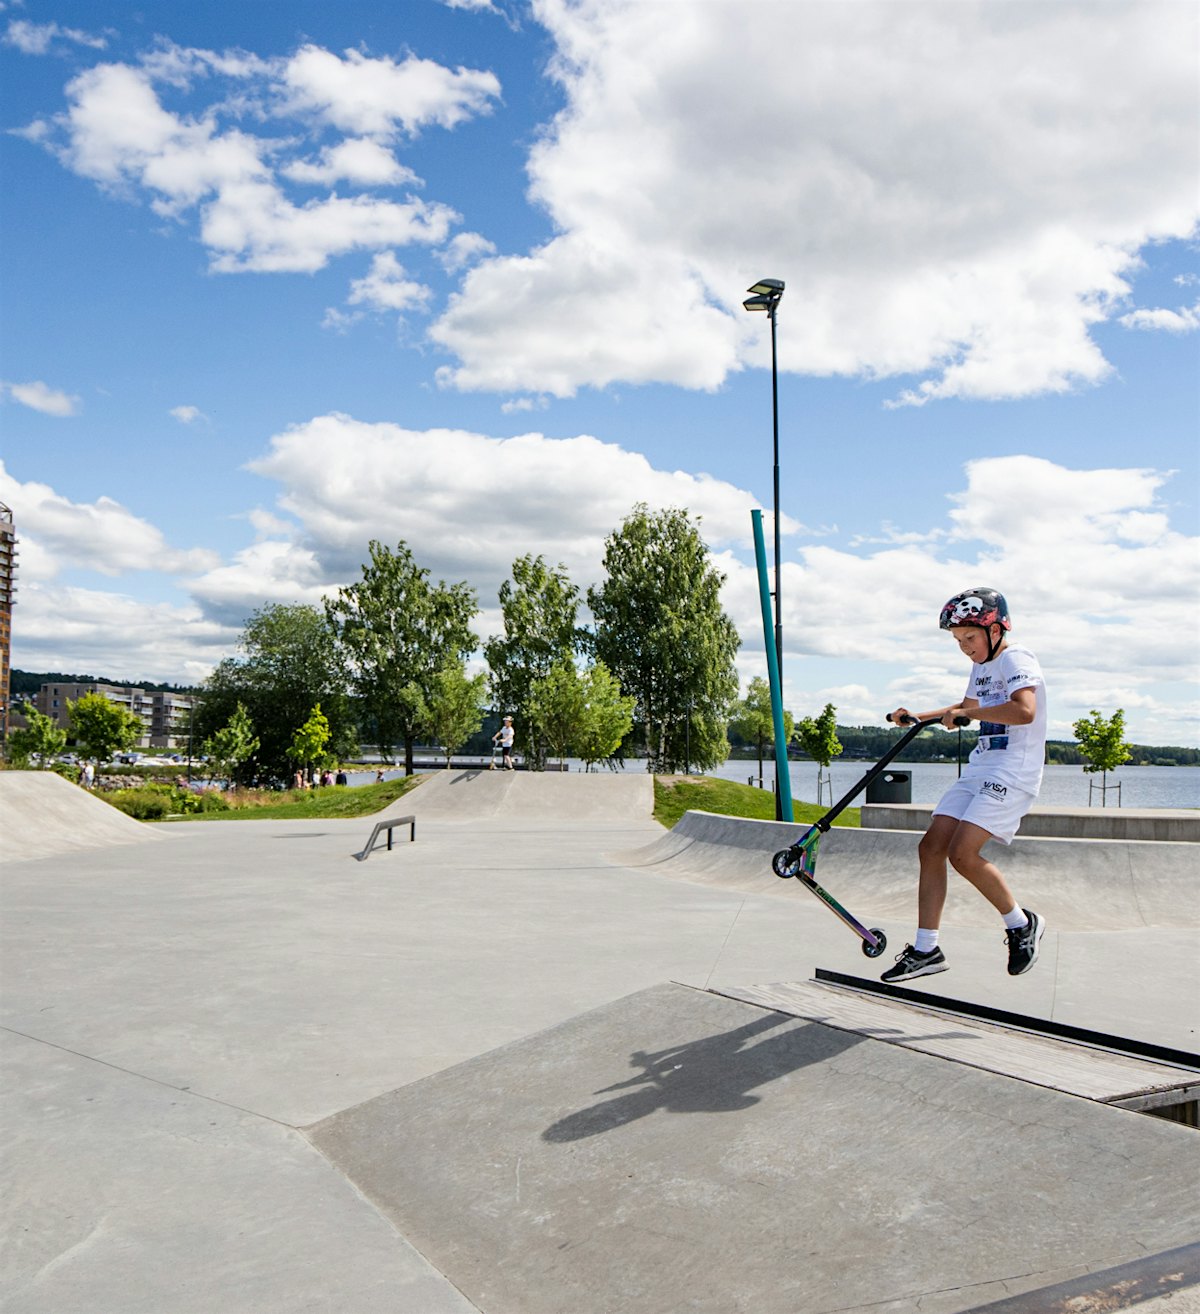 Junge auf Roller im Skatepark. Foto